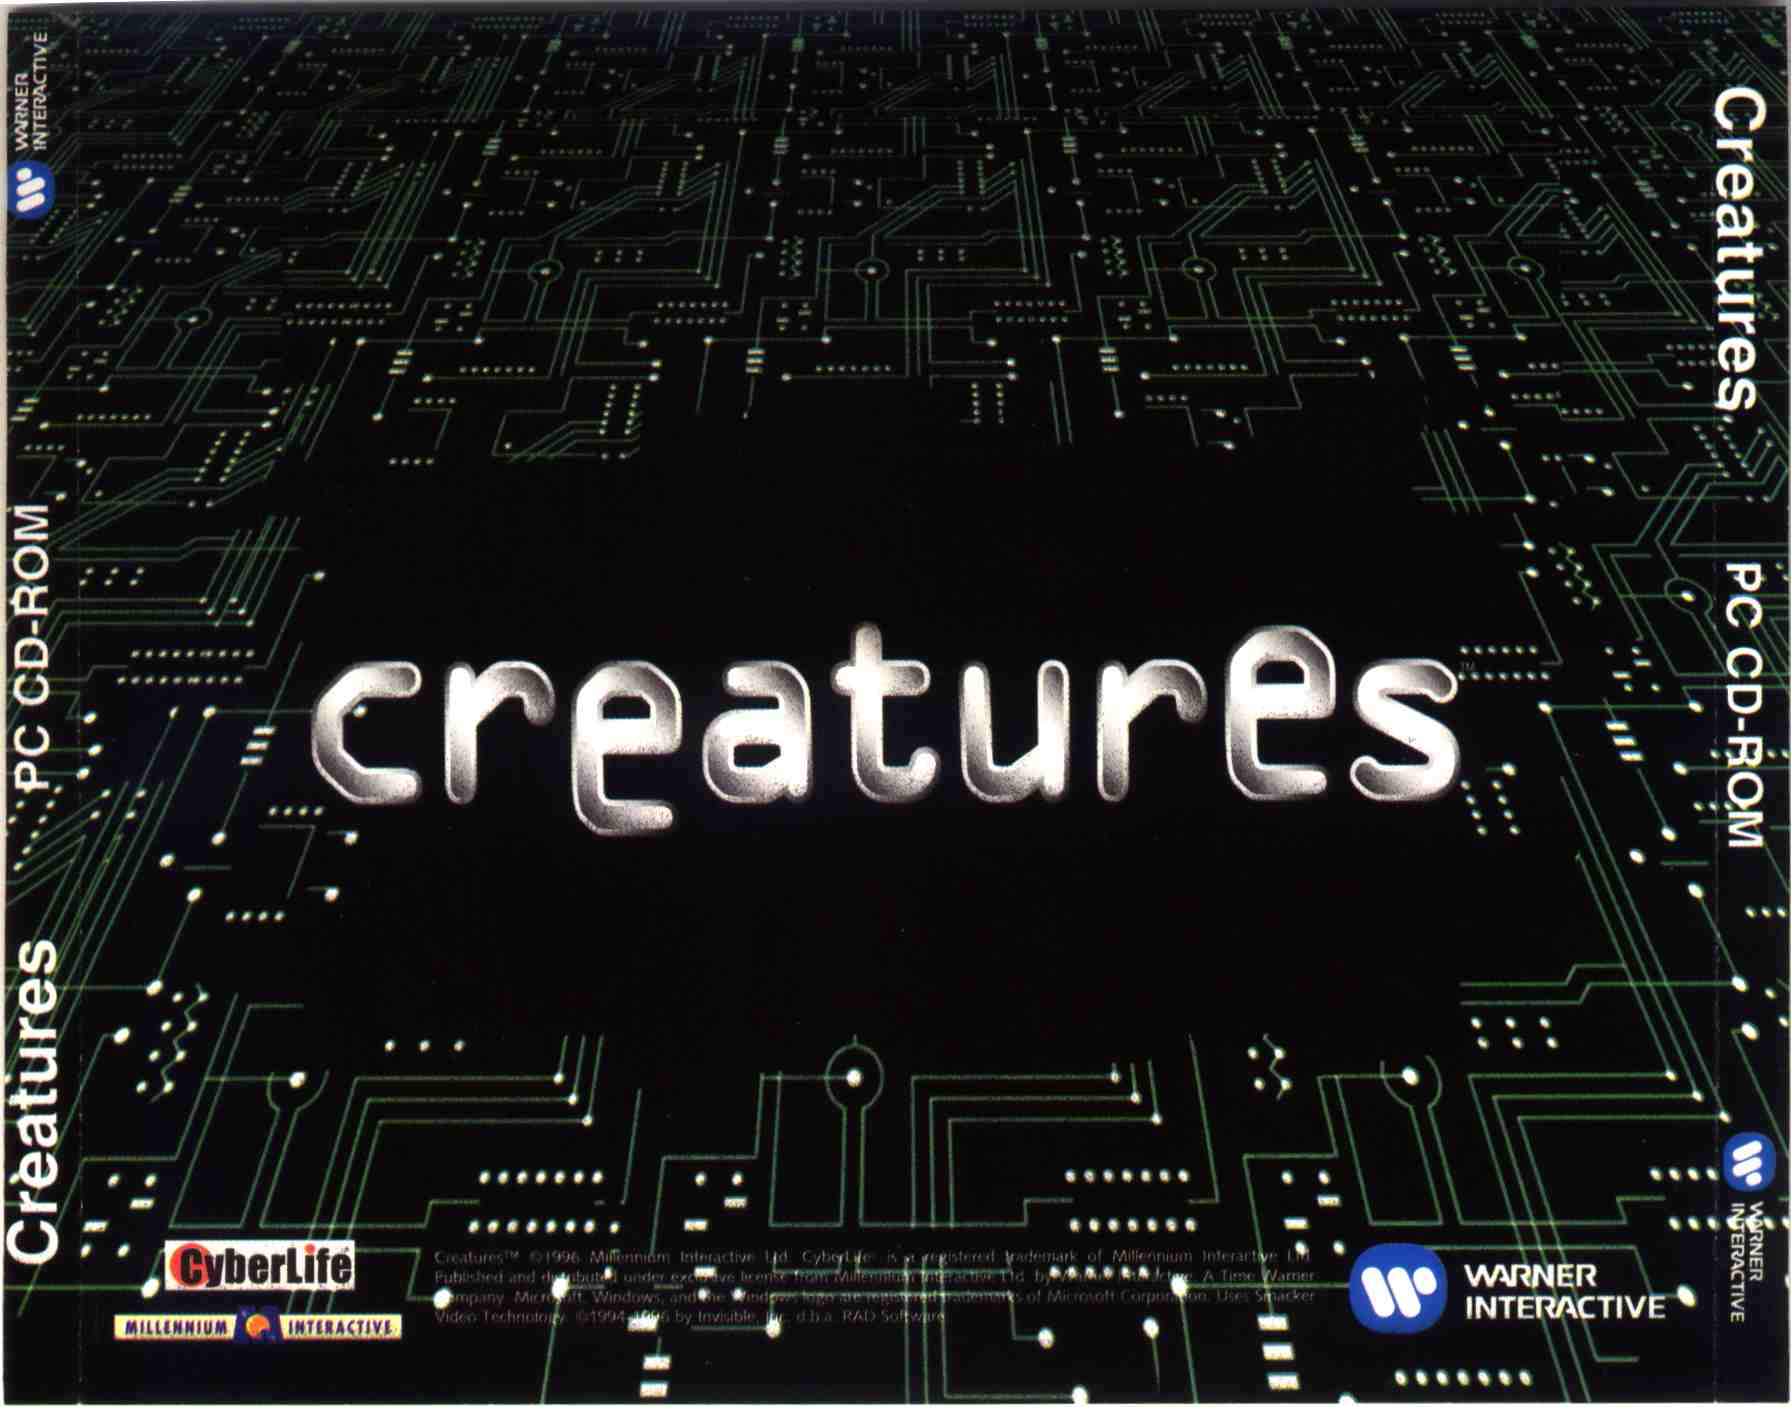 Creatures - zadn CD obal